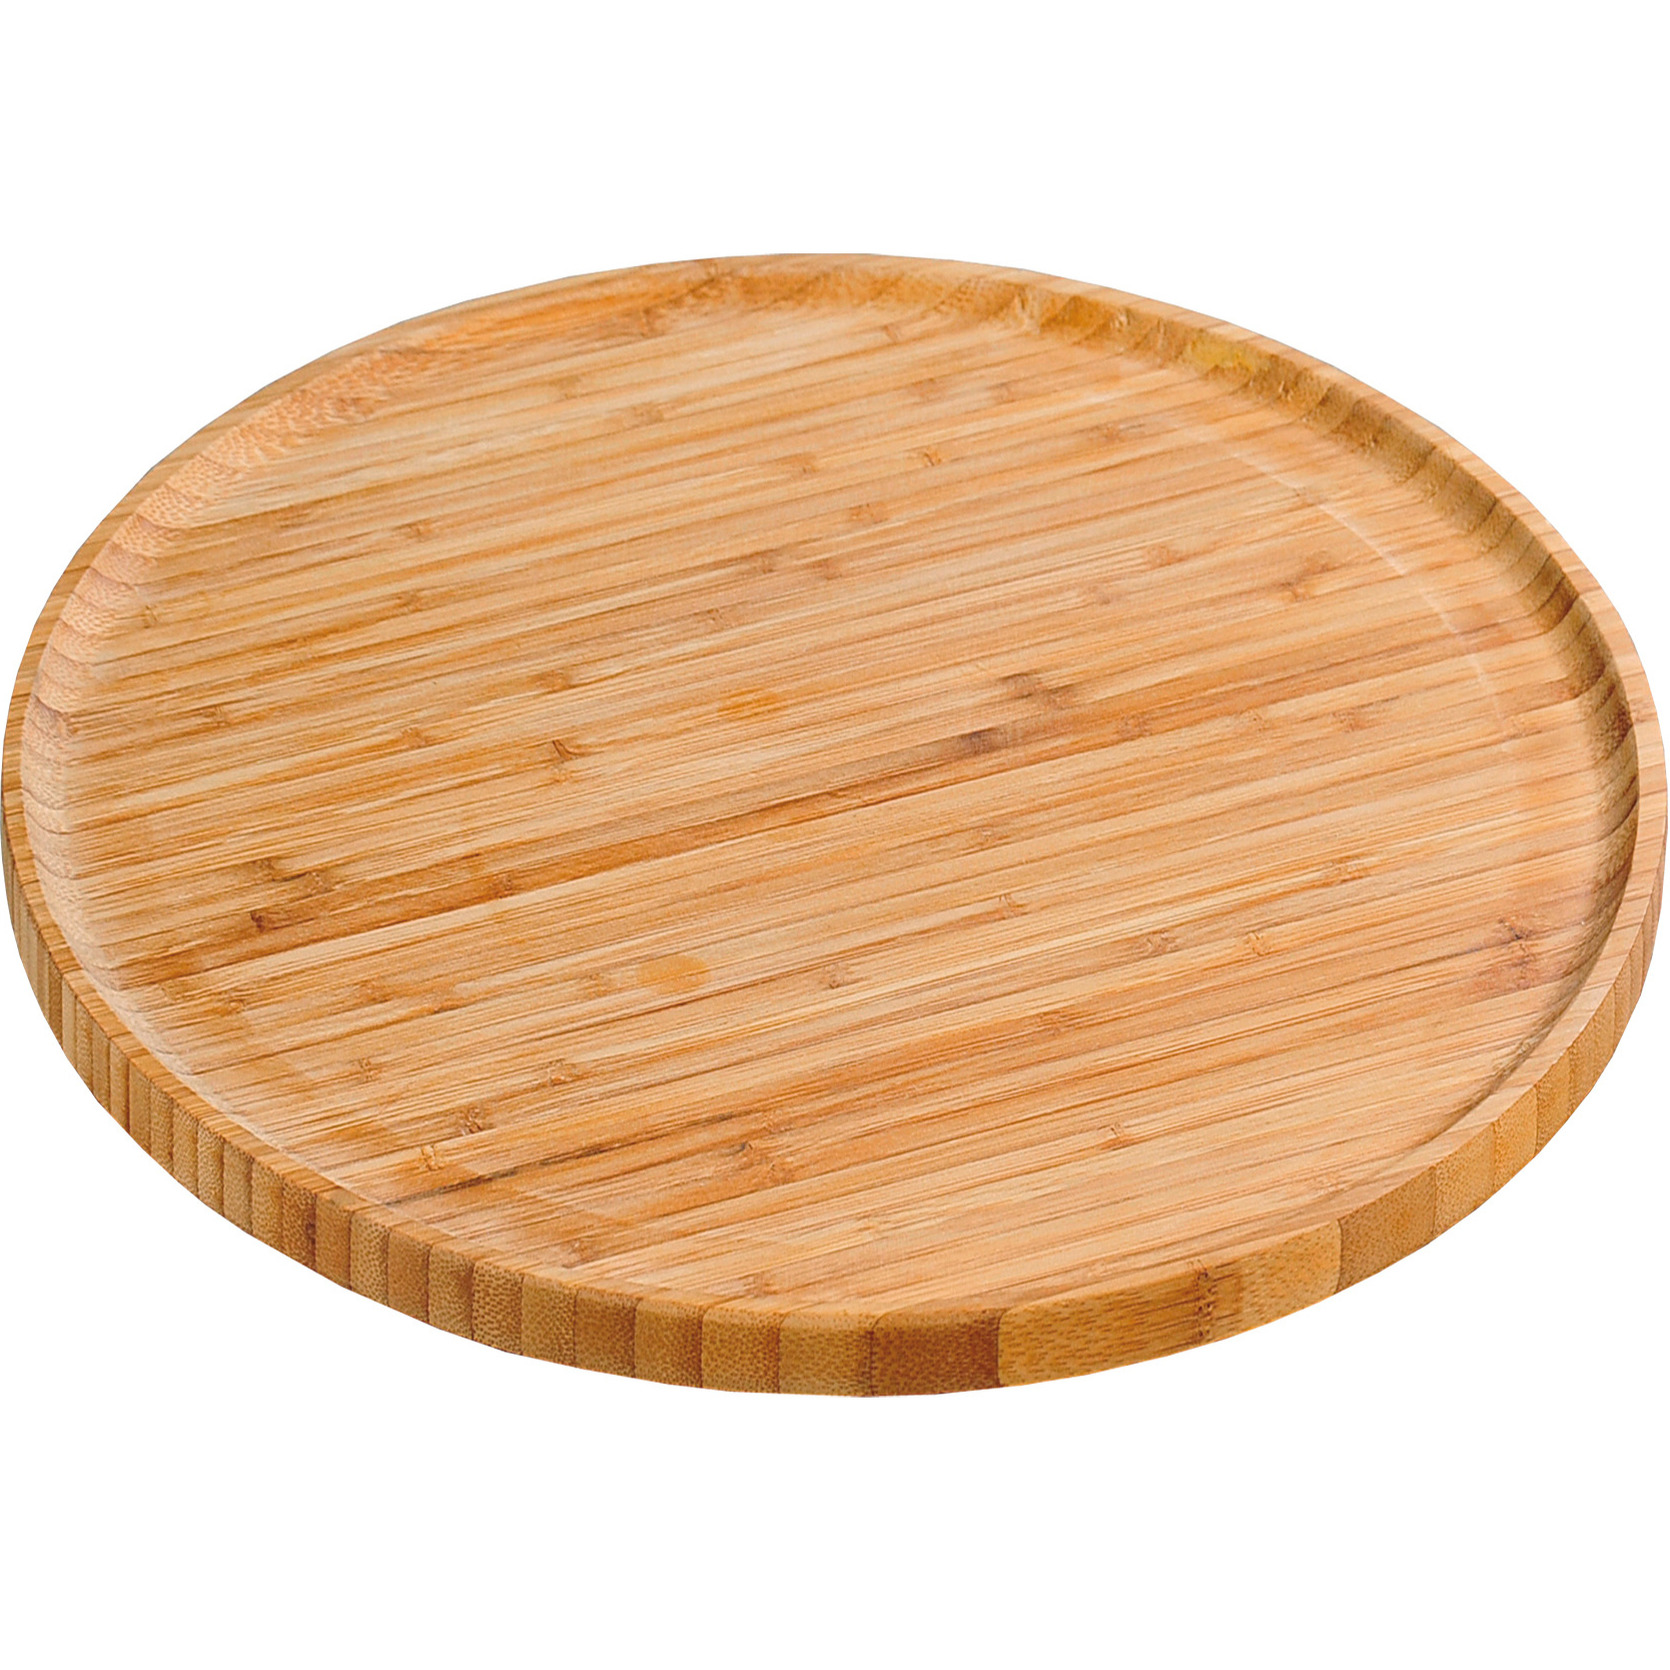 Hapjes-taart serveer plateau van bamboe houten rond 32 cm